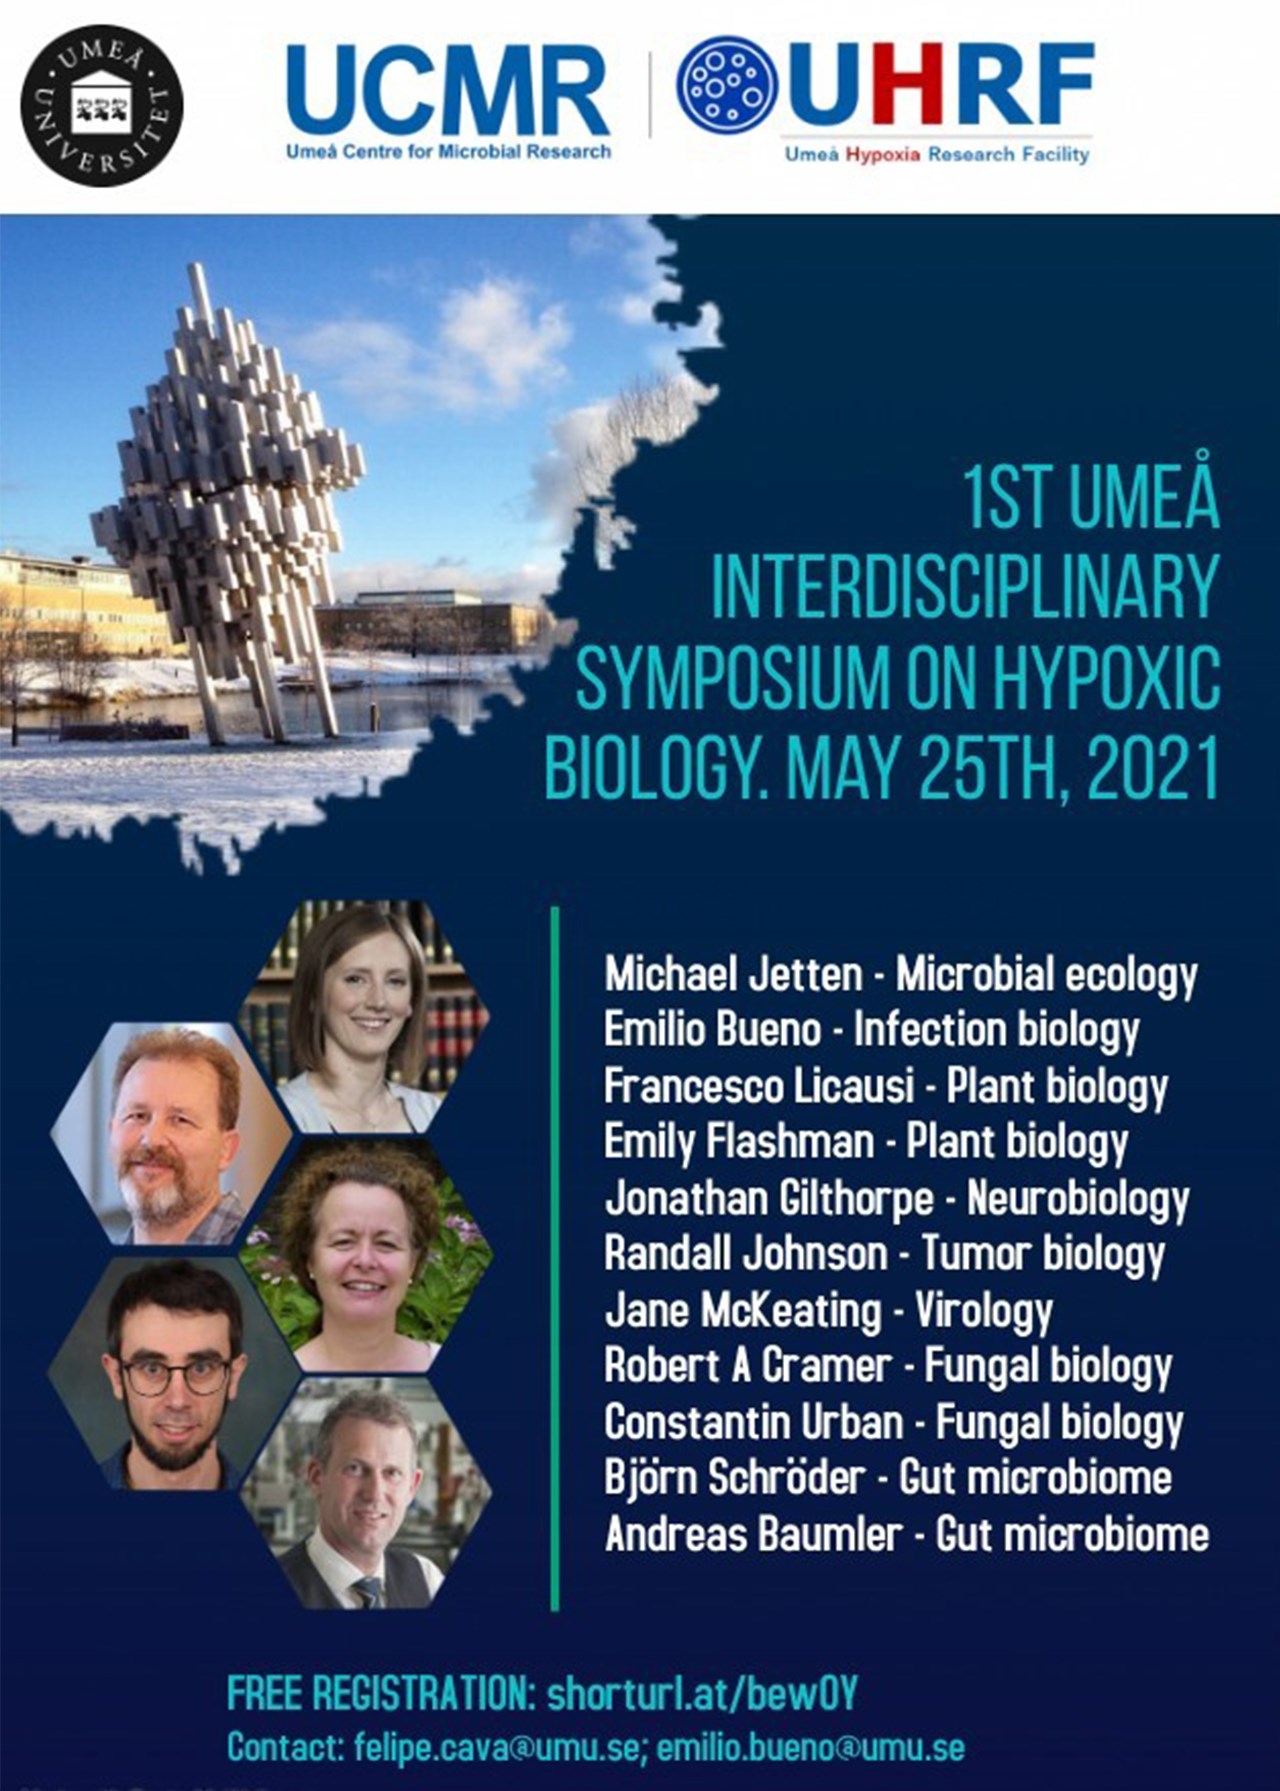 Poster for the 1st Umeå Interdisciplinary Symposium on Hypoxic Biology